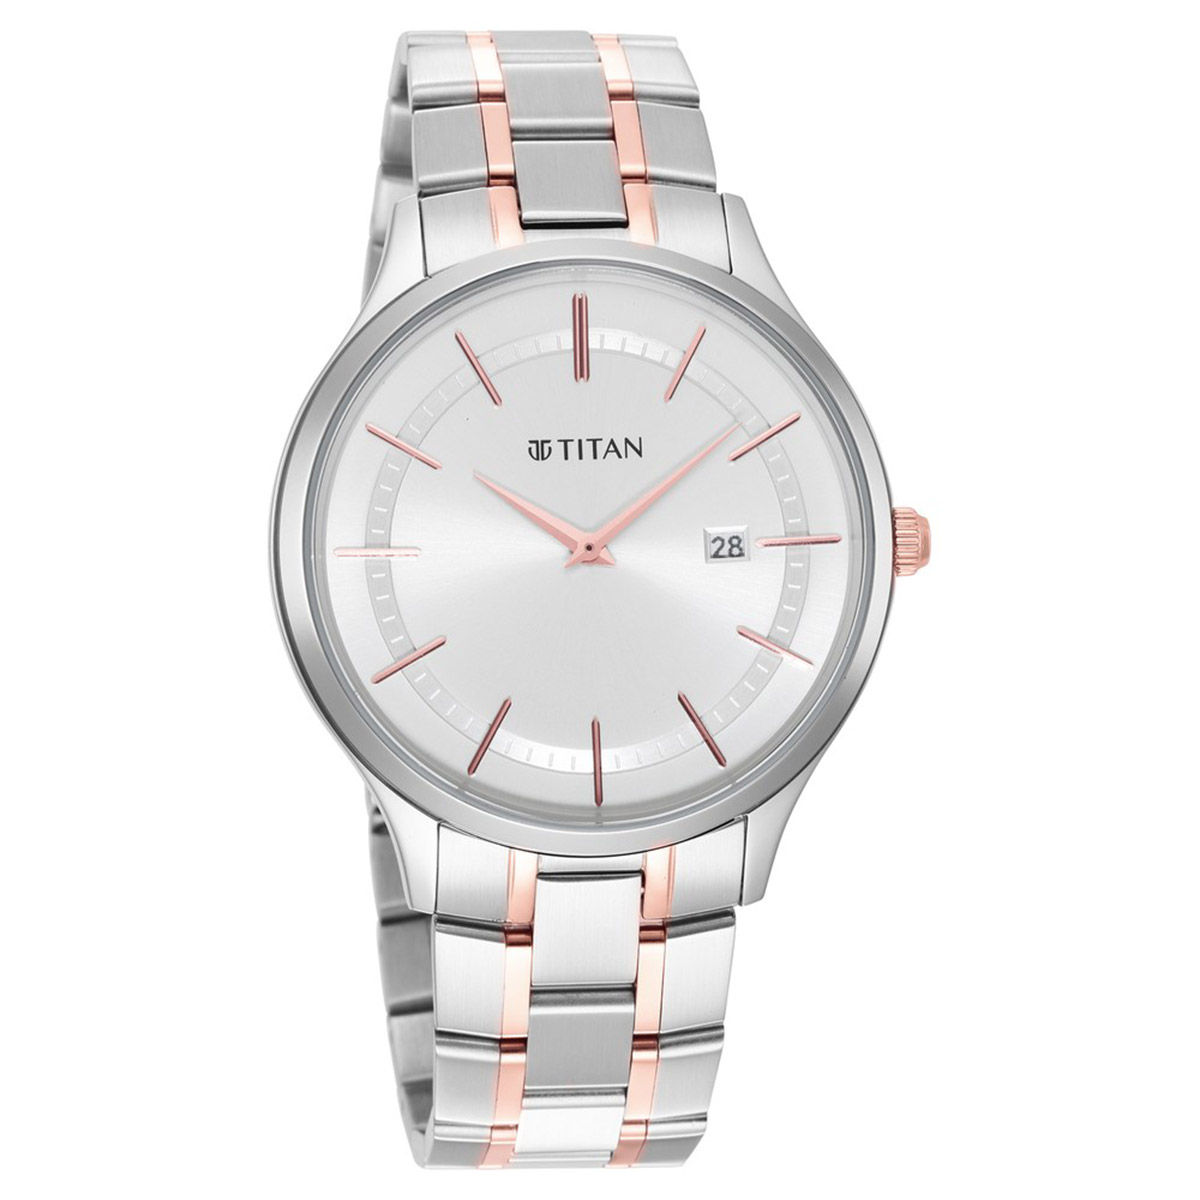 Titan Classique 90142KM01 White Dial Analog watch for Men